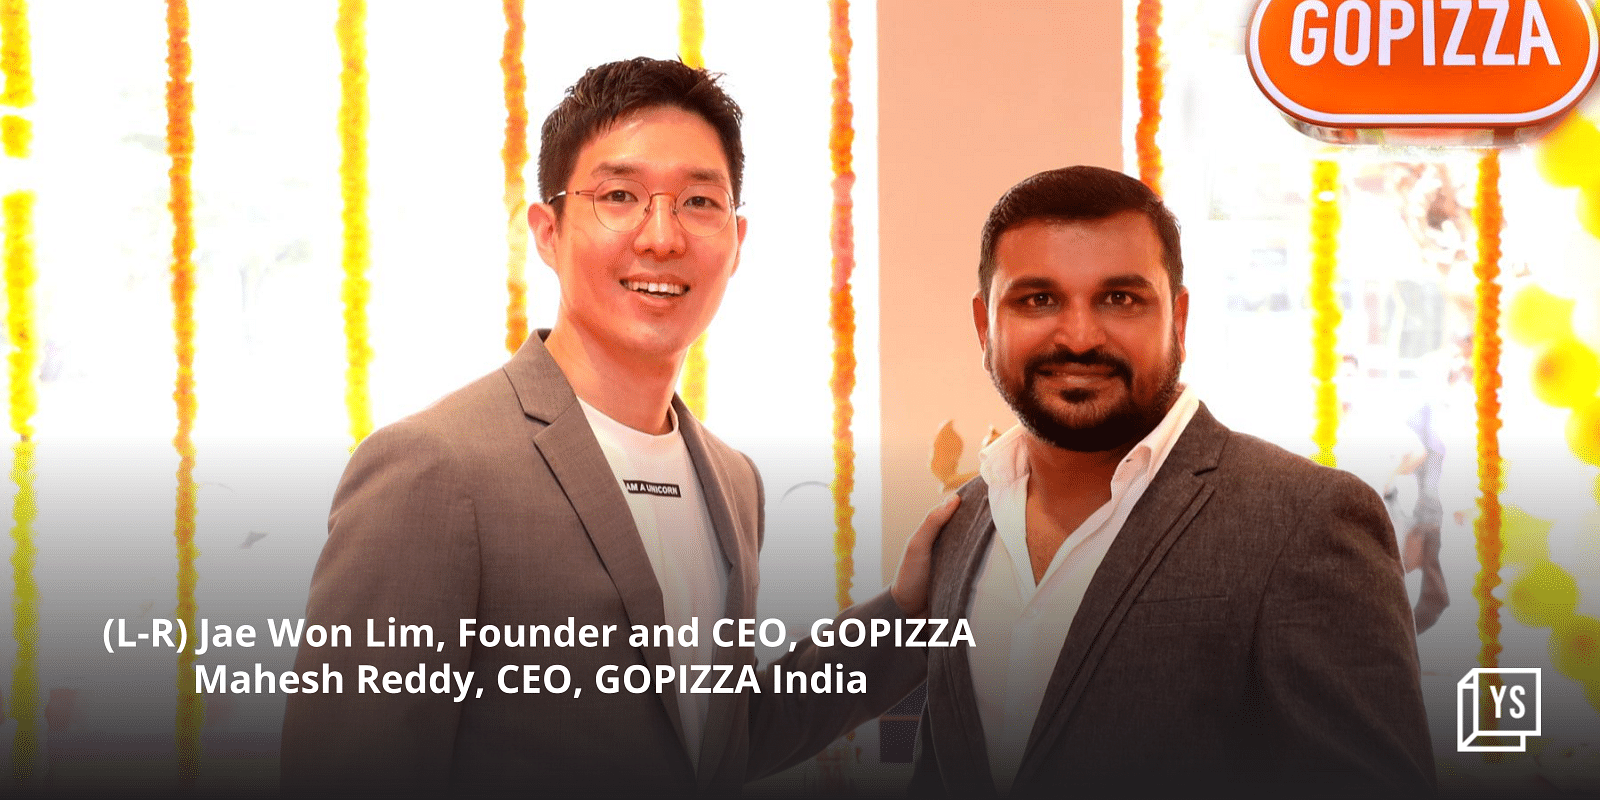 GOPIZZA raises $25M in Series C round to expand in India